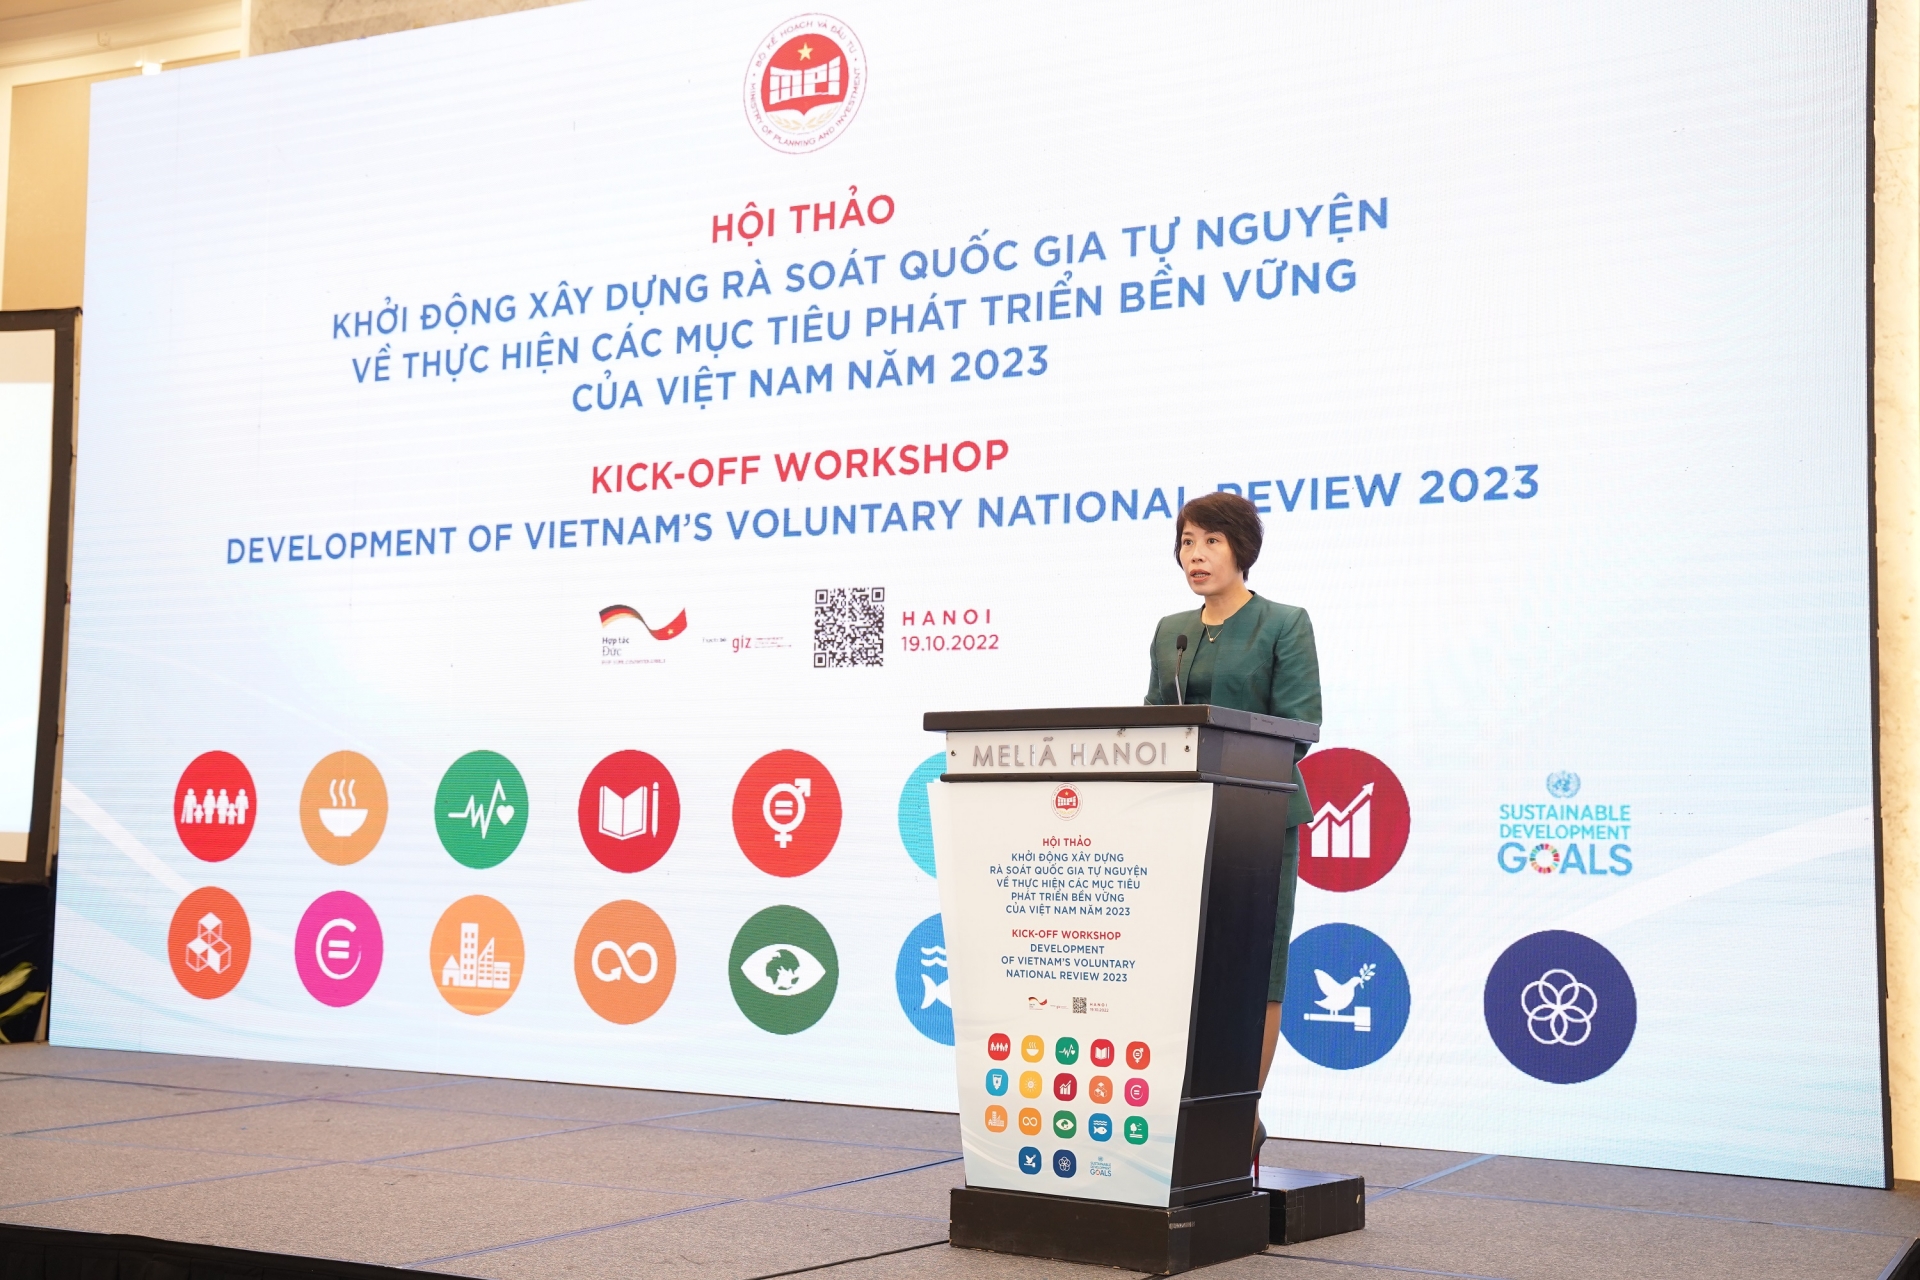 Kick-off Workshop on the Development of Vietnam ’s Voluntary National Review (VNR) 2023